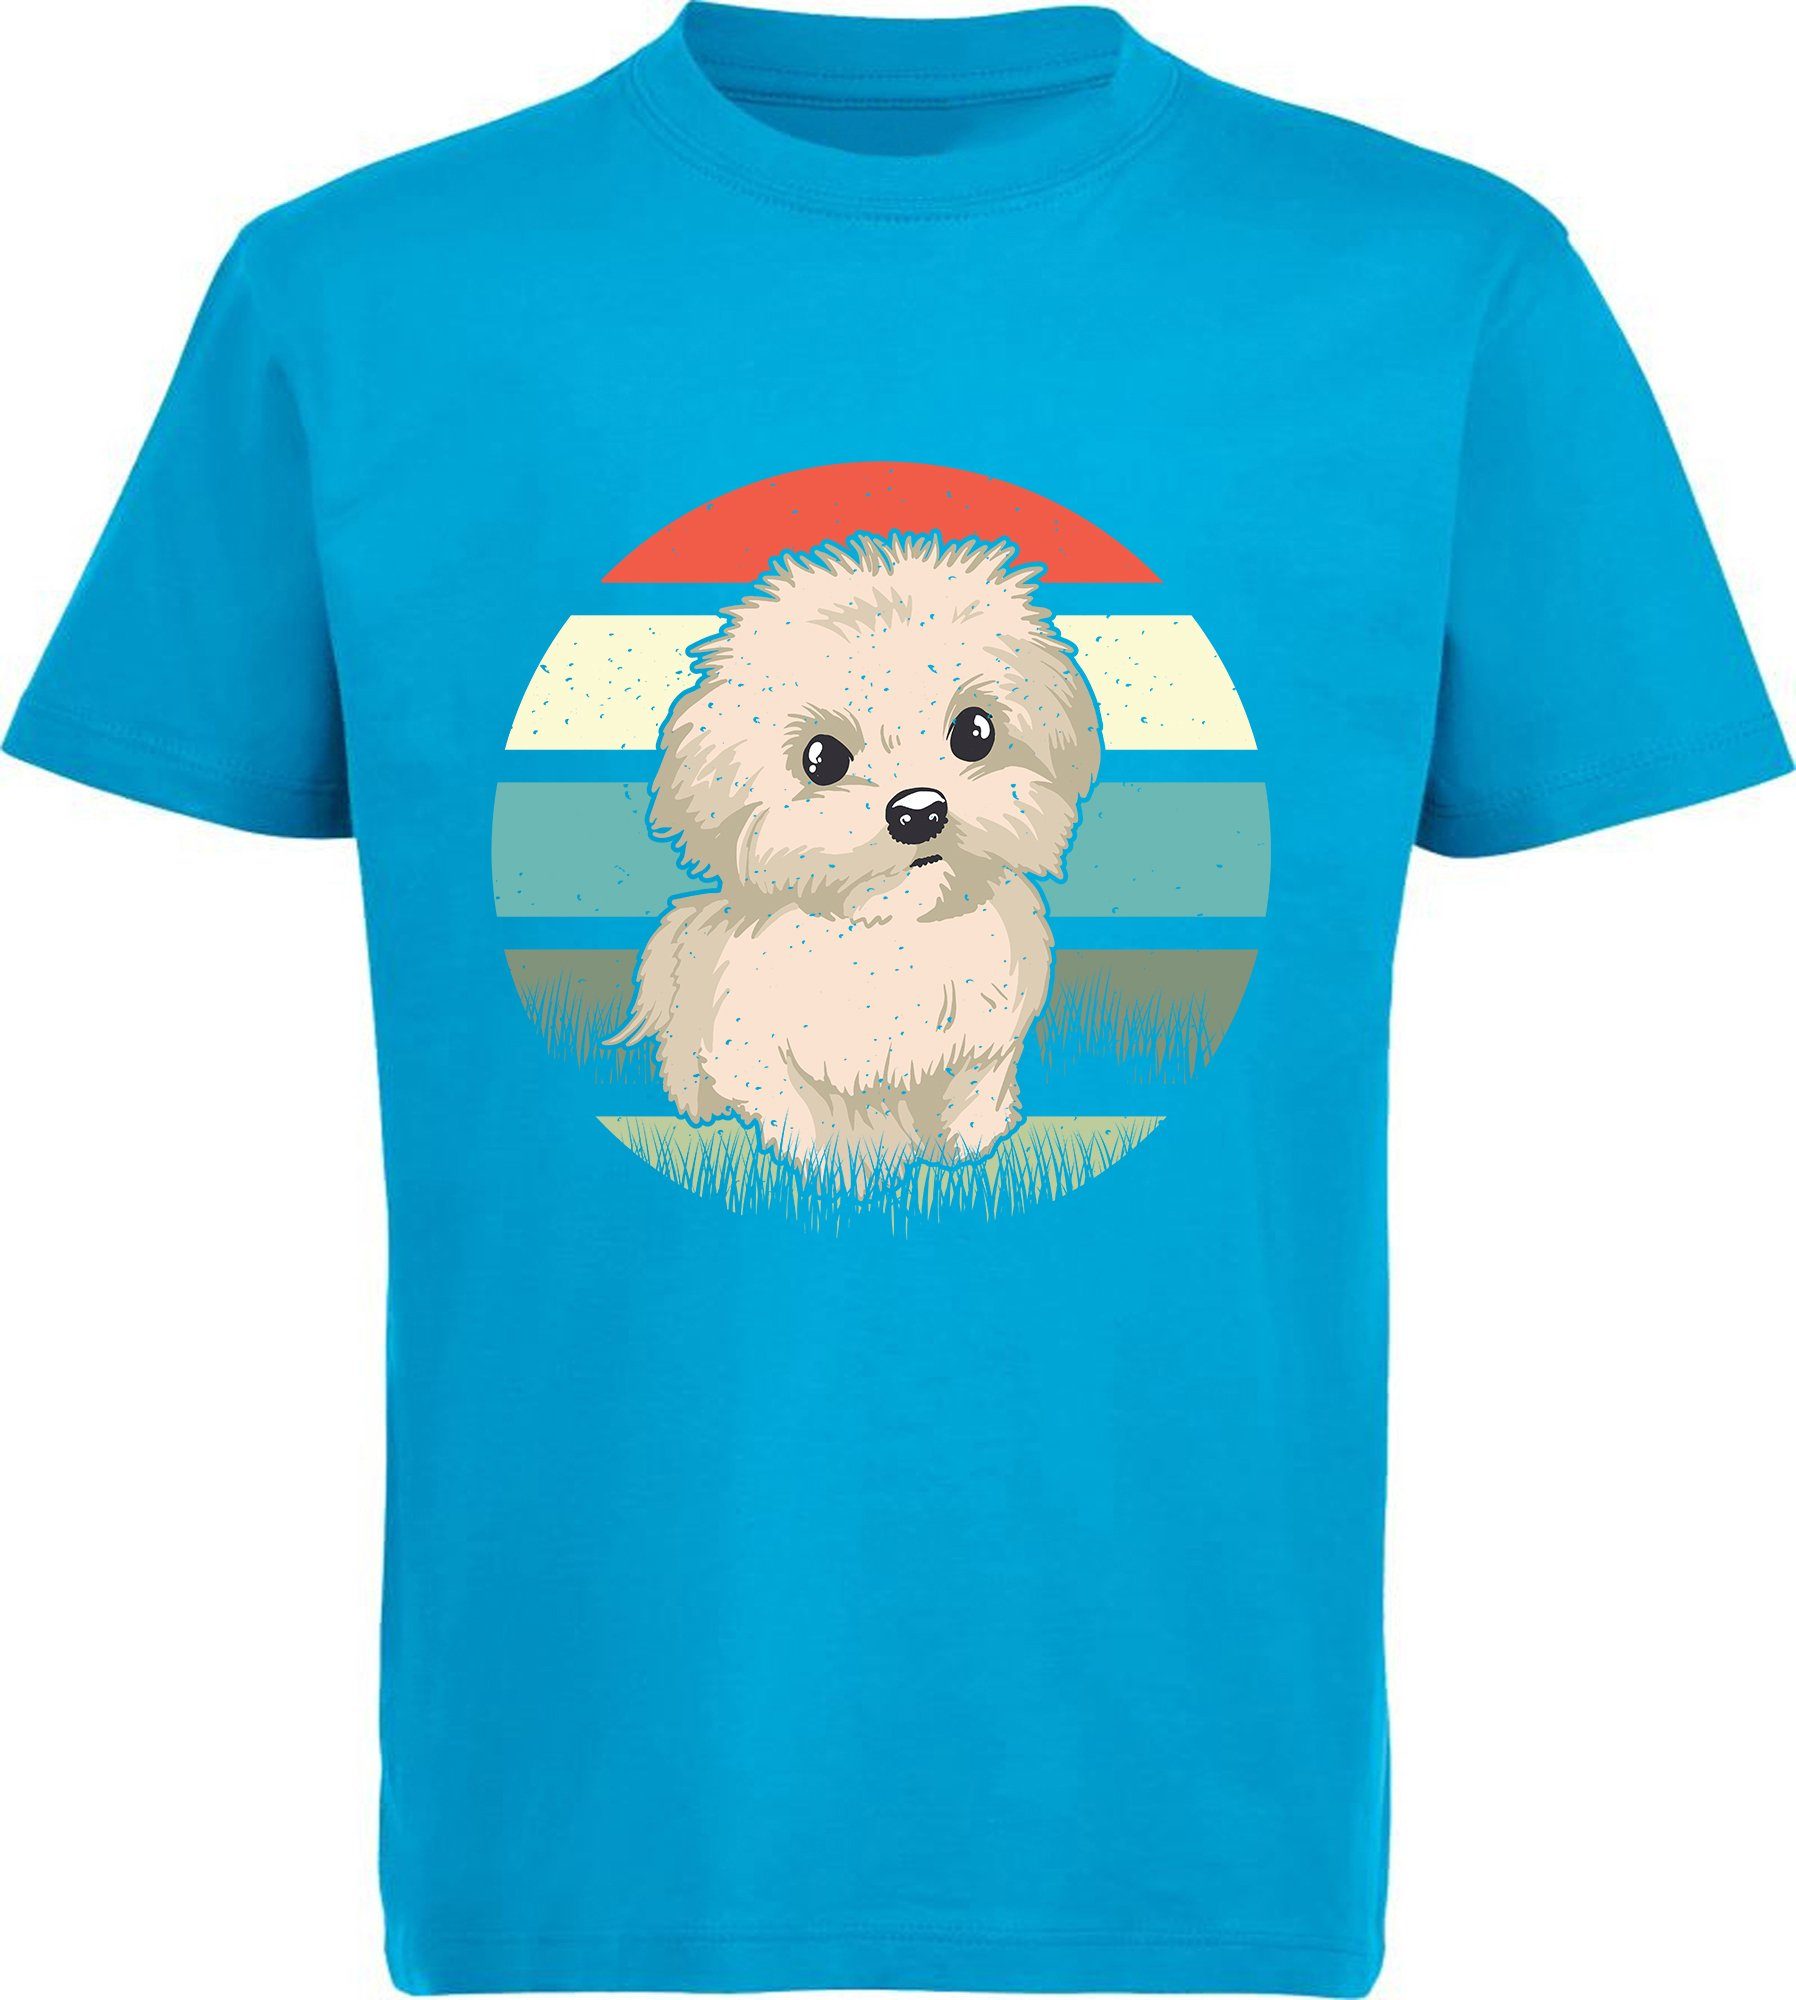 MyDesign24 Print-Shirt Kinder Hunde T-Shirt bedruckt - Retro Malteser Welpen Baumwollshirt mit Aufdruck, i242 aqua blau | T-Shirts